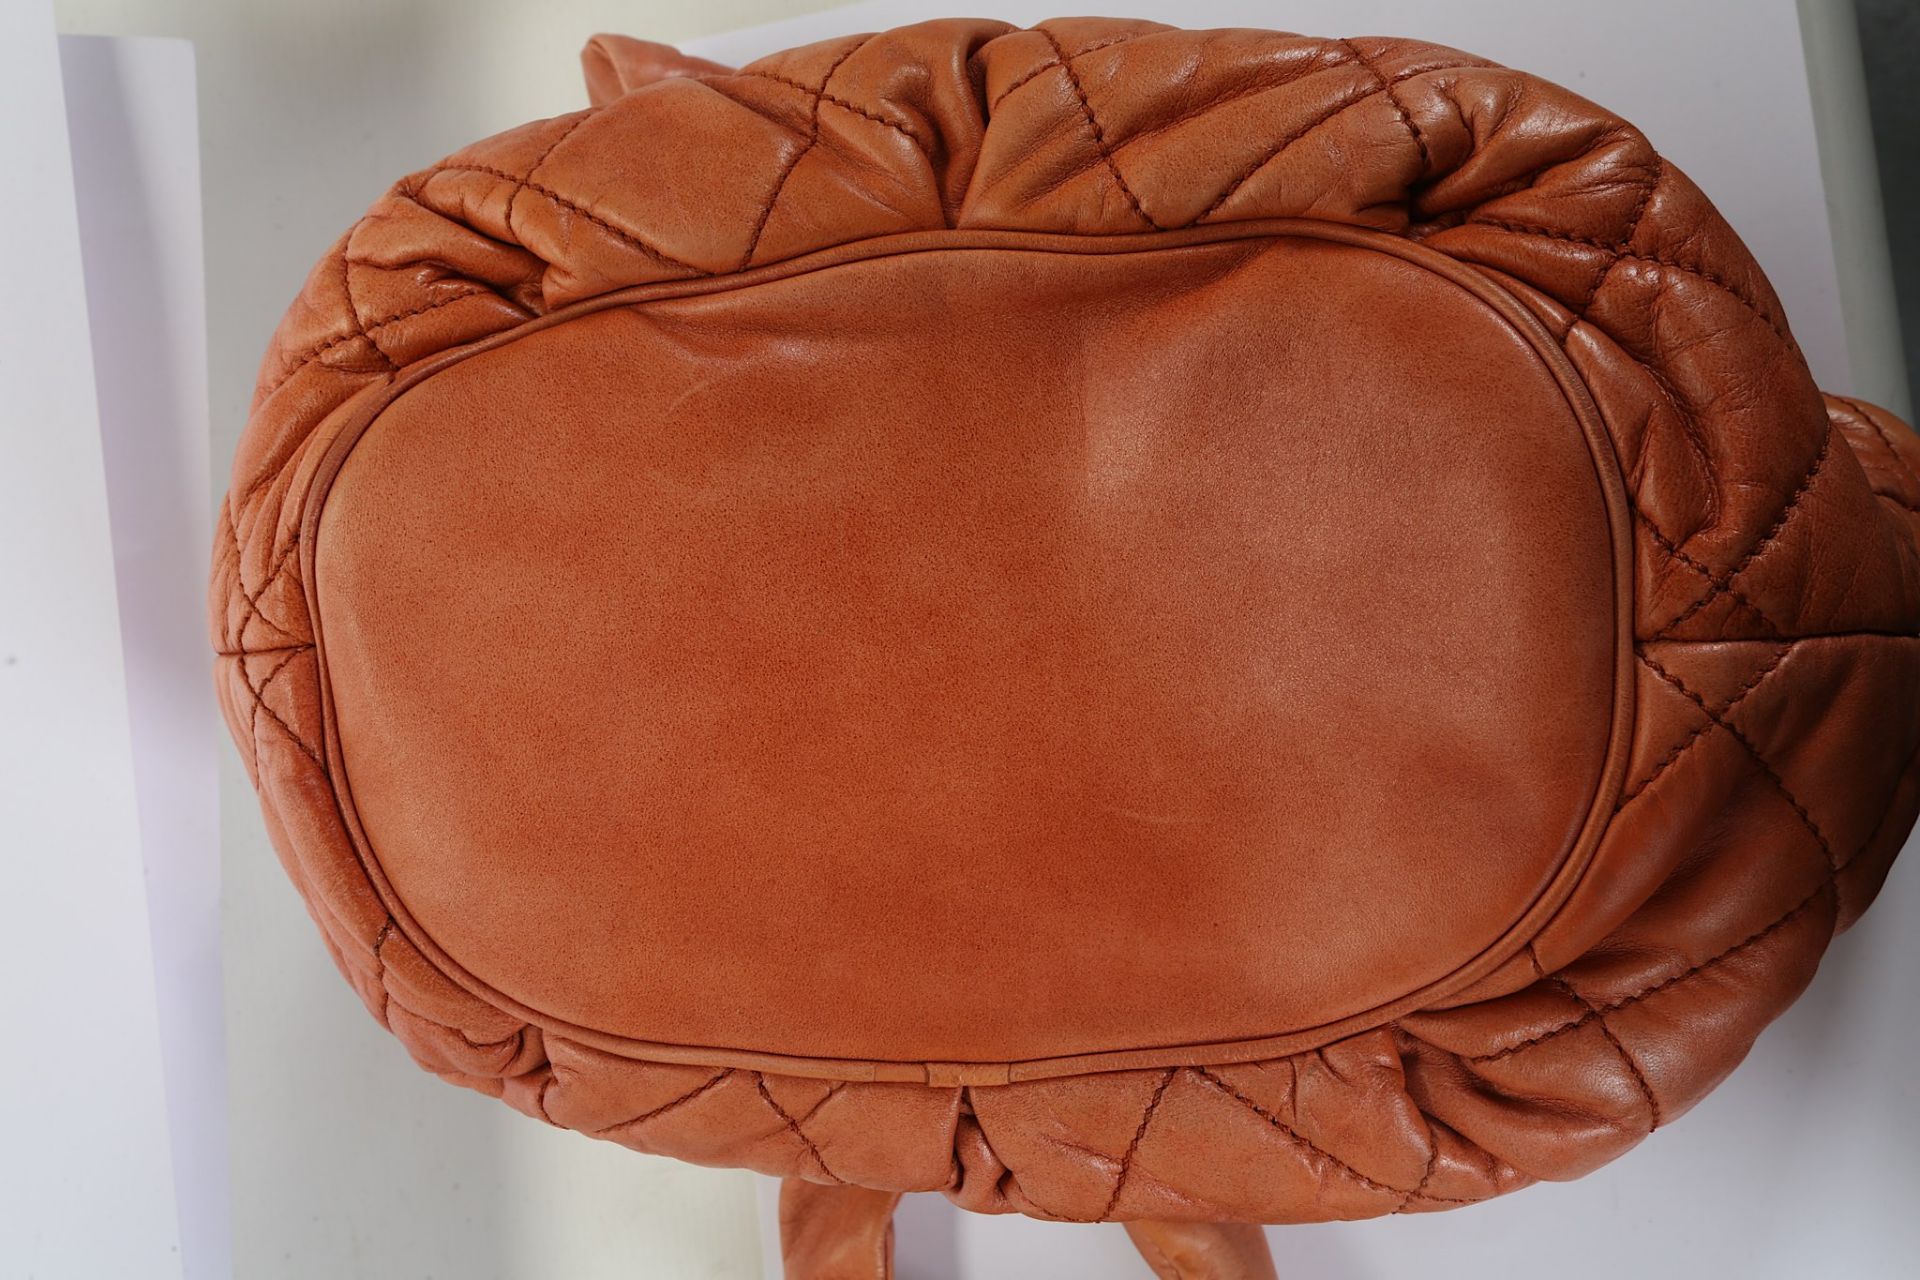 Chanel Coral Leather Shoulder Bag, c. 2005-06, puf - Bild 7 aus 7